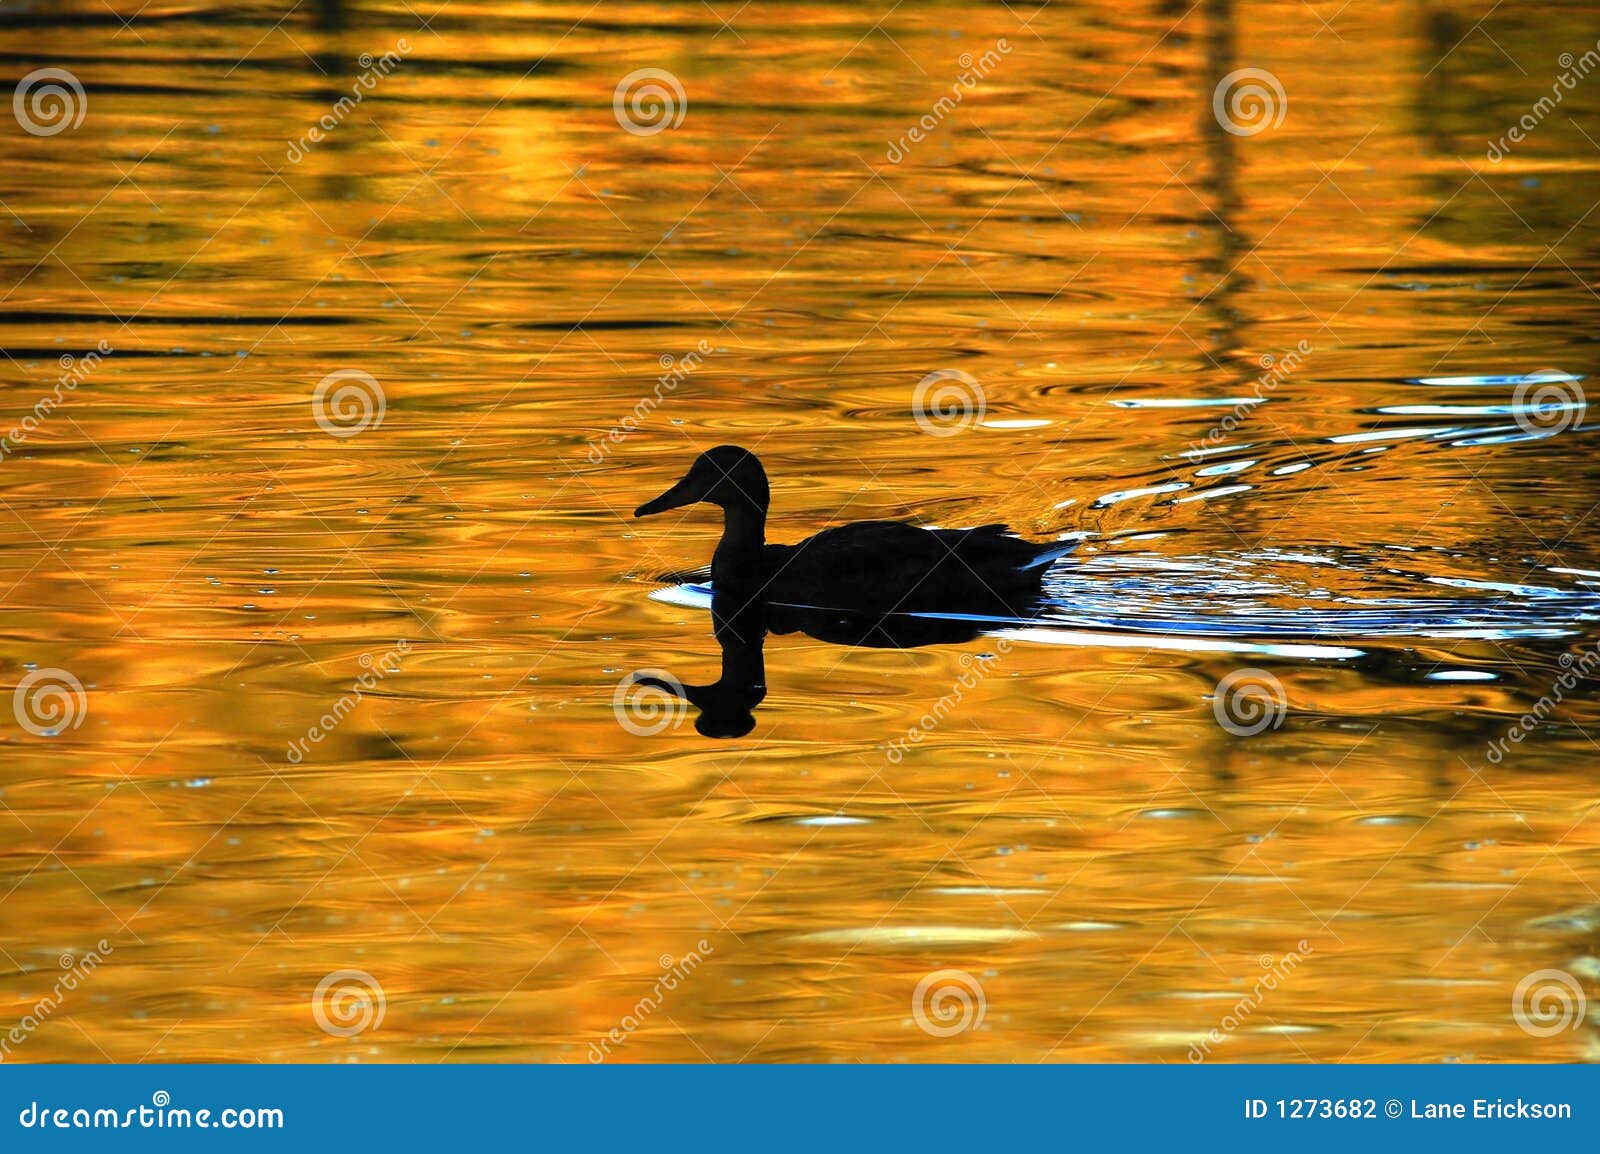 duck silhouette on golden pond